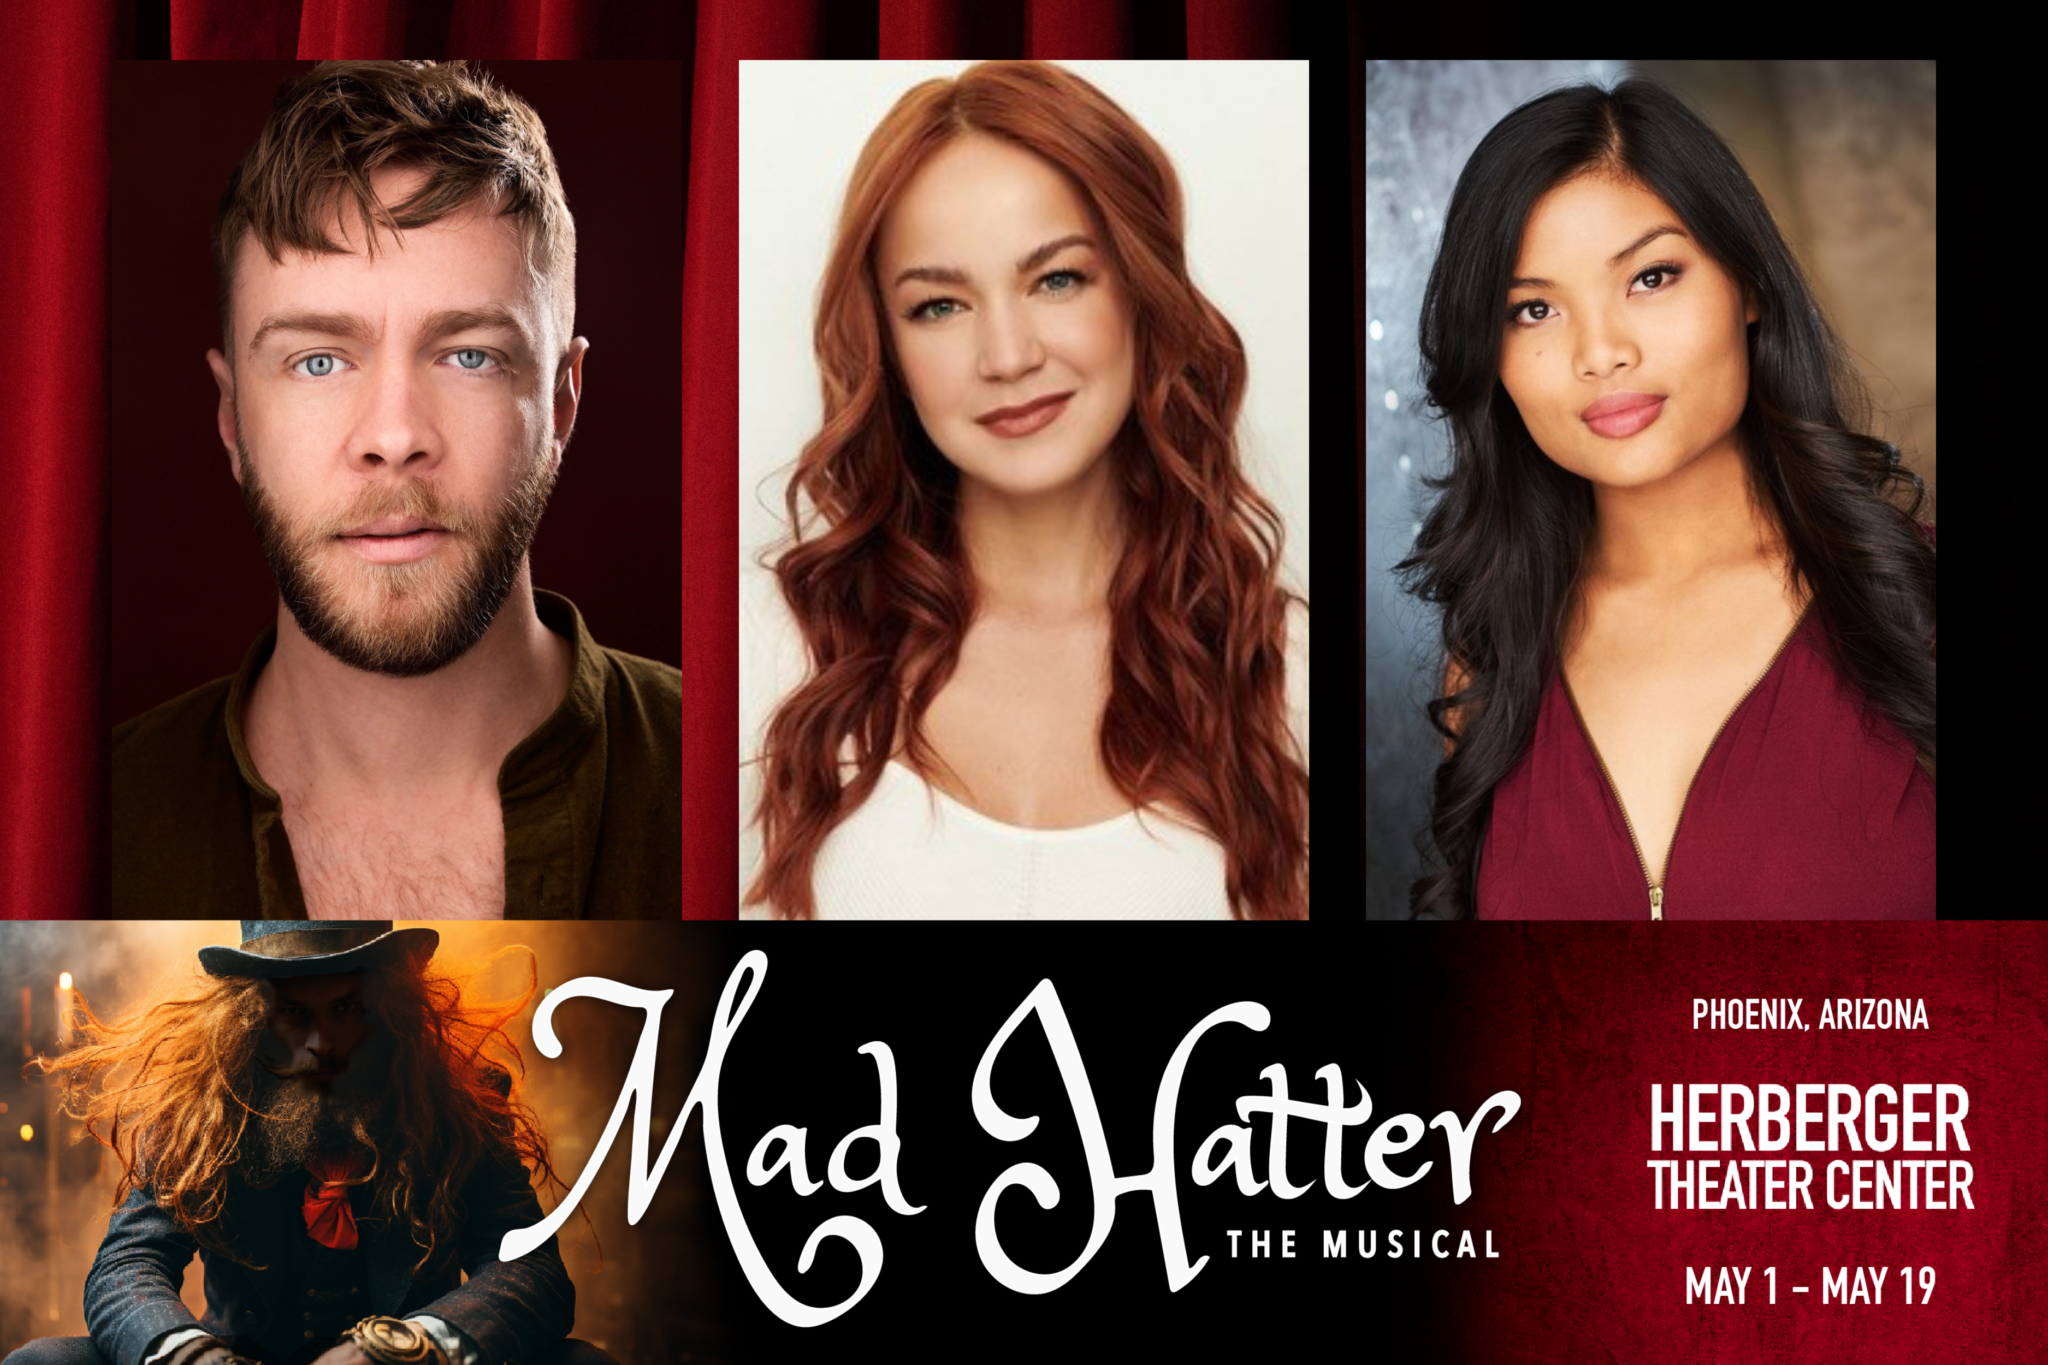 TRAVIS KENT, REANNE ACASIO AND LAUREN ZAKRIN To Star in World Premiere Musical “Mad Hatter The Musical”